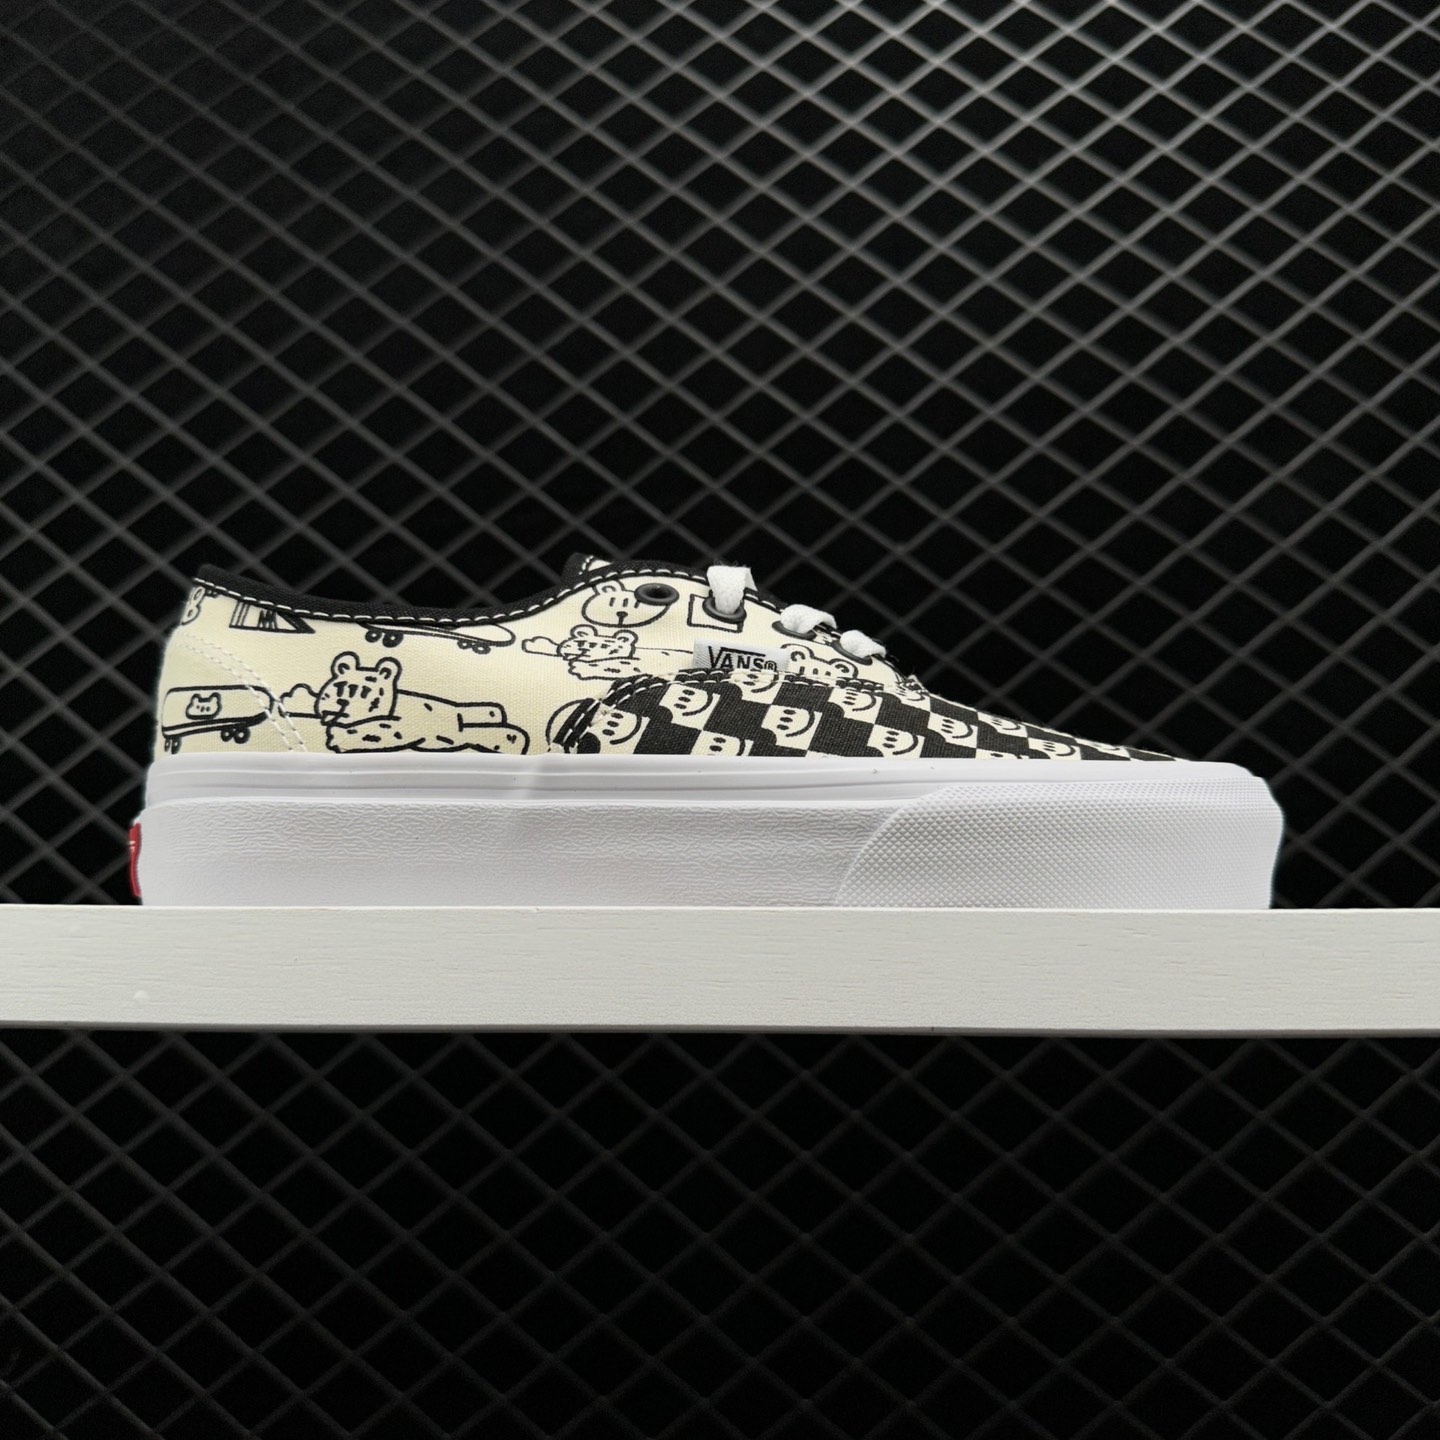 Vans Run Authentic OTW Art Black Marshmallow Sneakers - Limited Edition VN0A5KS9BPR1